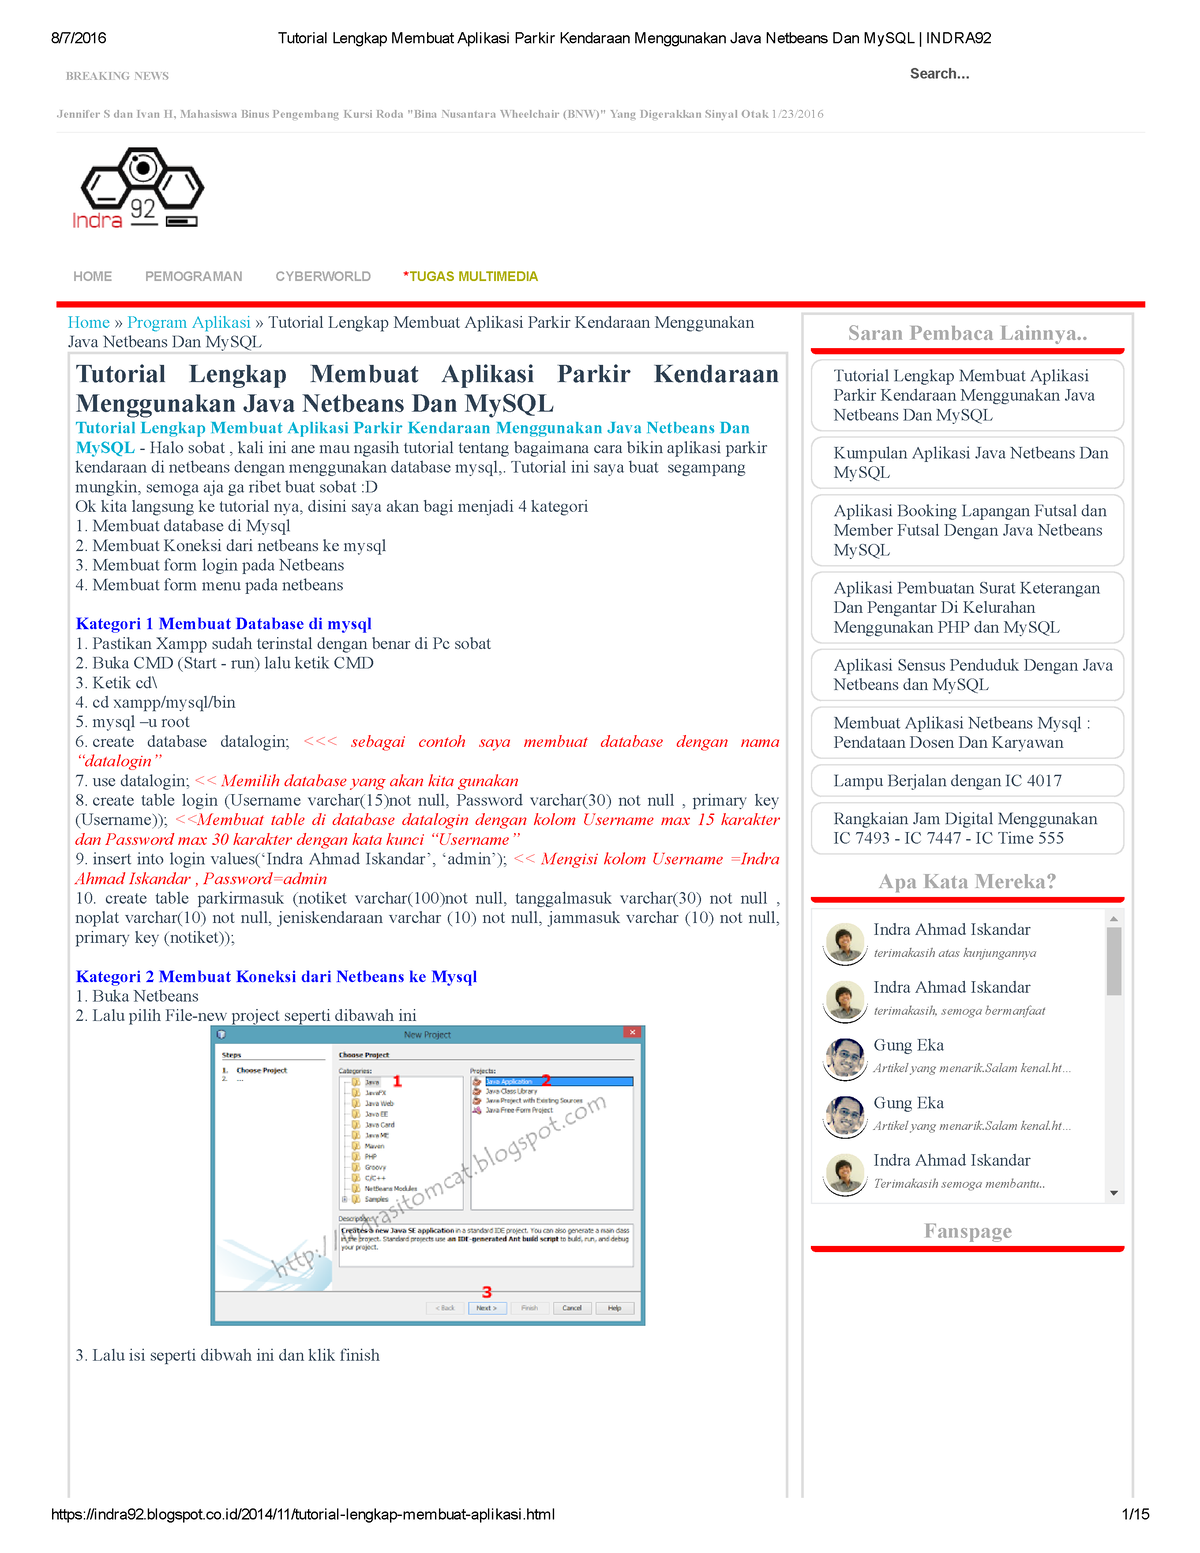 Tutorial Lengkap Membuat Aplikasi Parkir Kendaraan Menggunakan Java Netbeans Dan My Sql Indra 92 9276